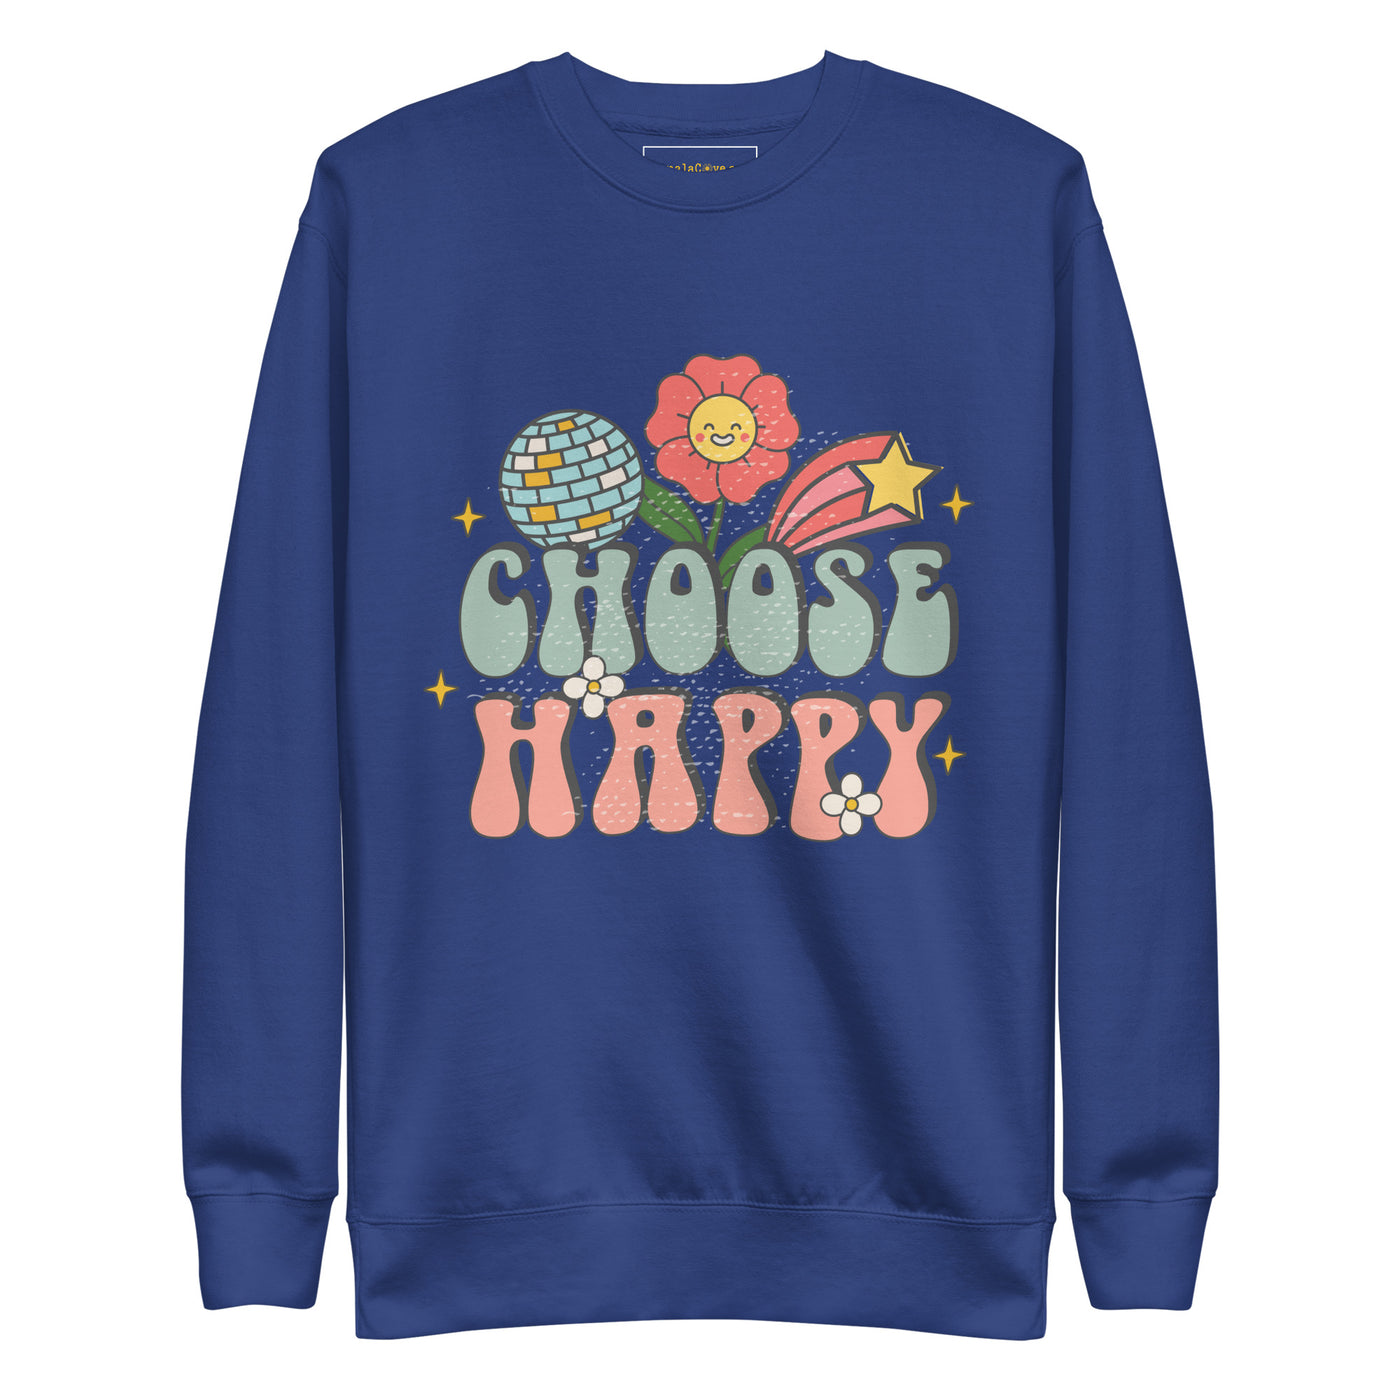 "Choose Happy Disco" Unisex Premium Sweatshirt